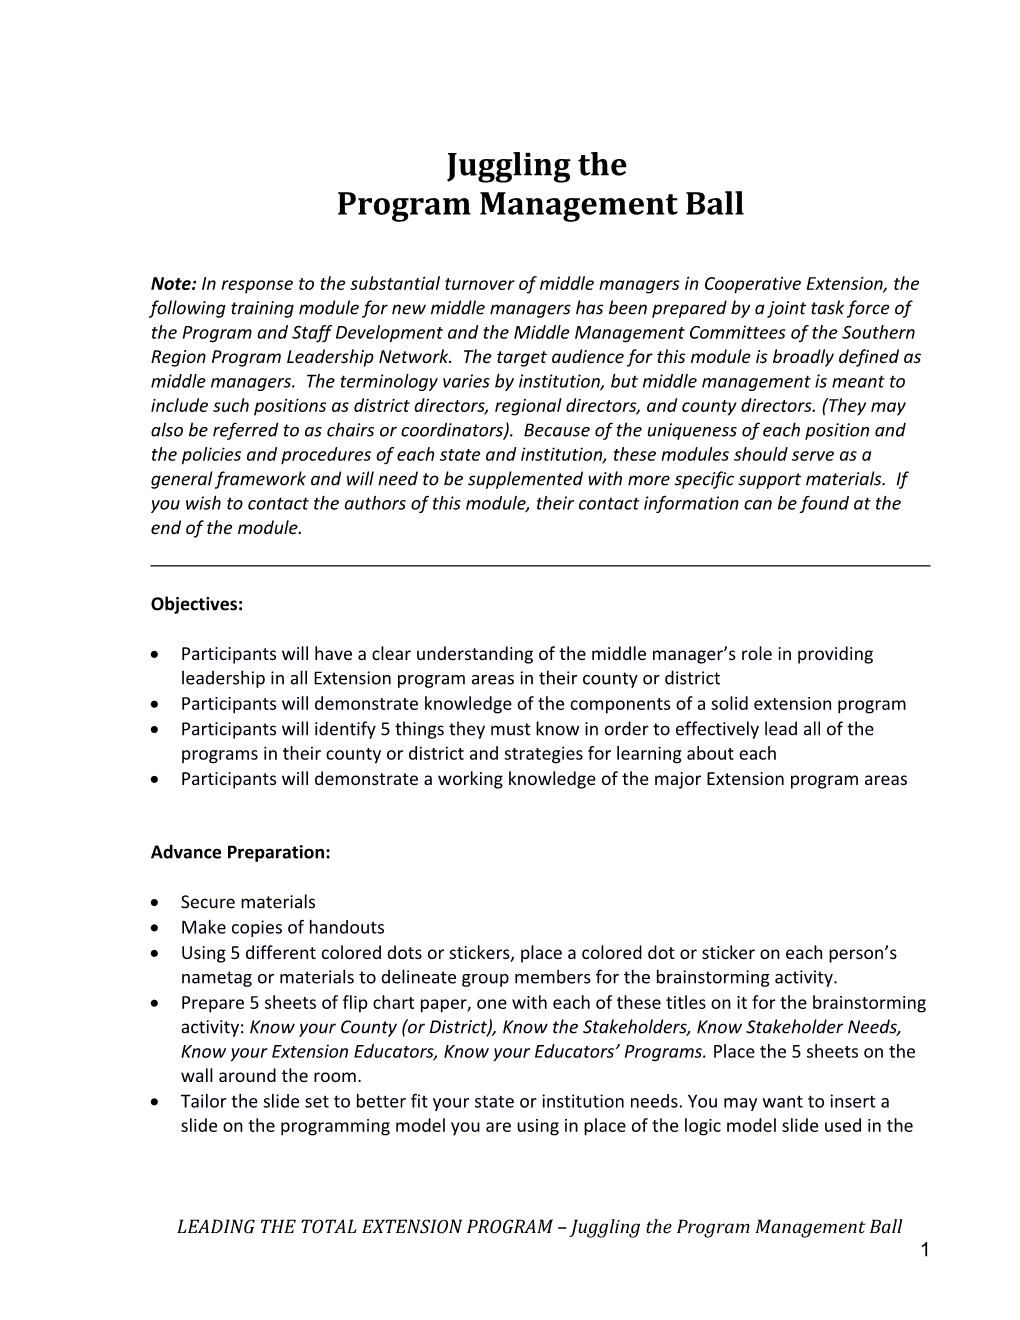 Program Management Ball